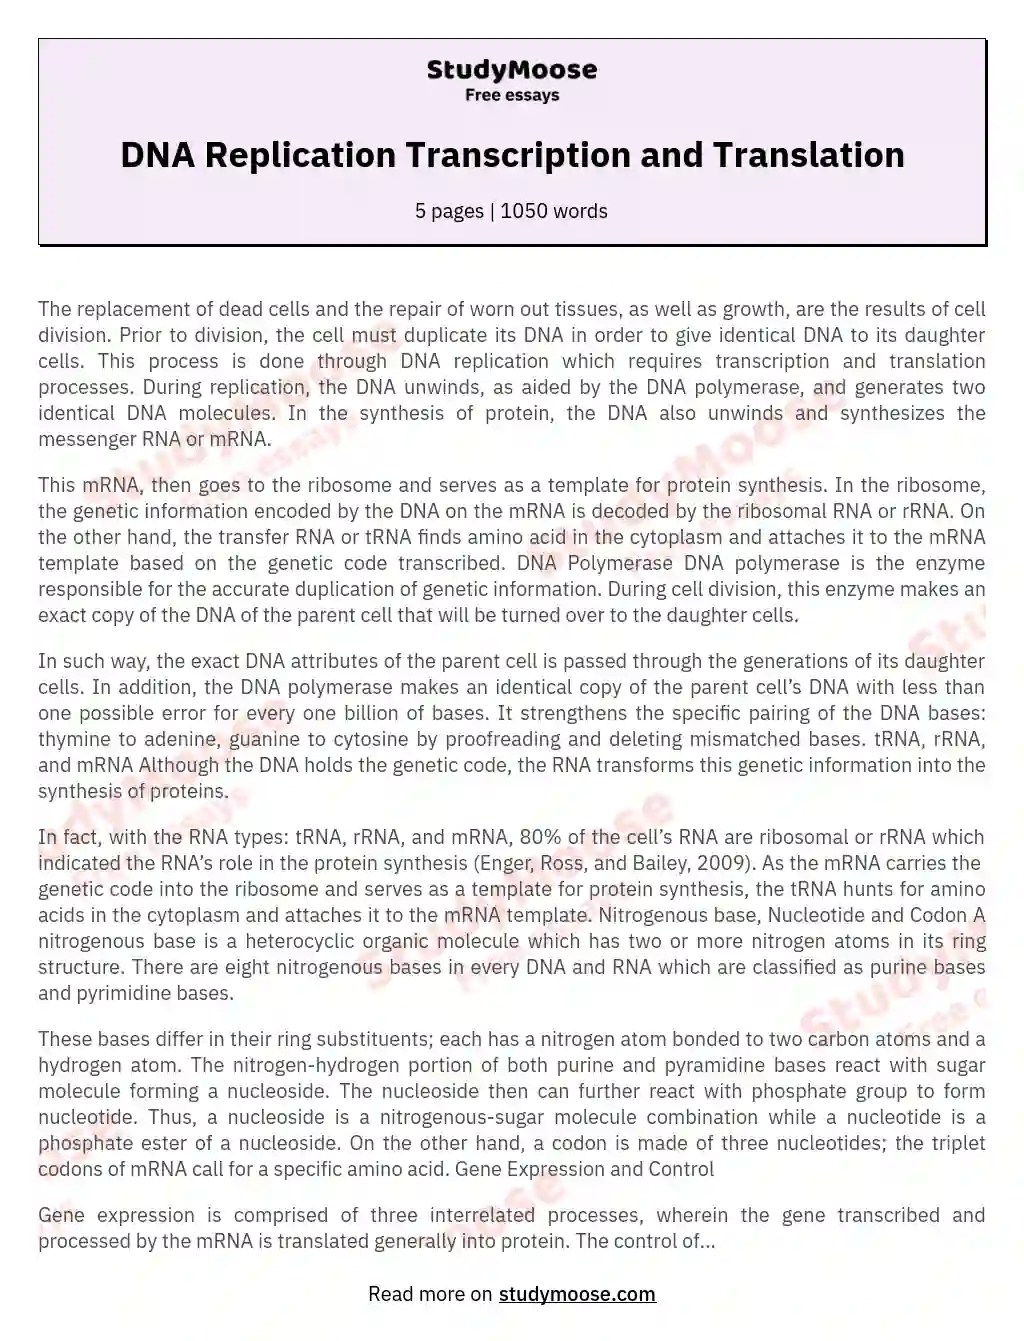 transcription and translation essay questions